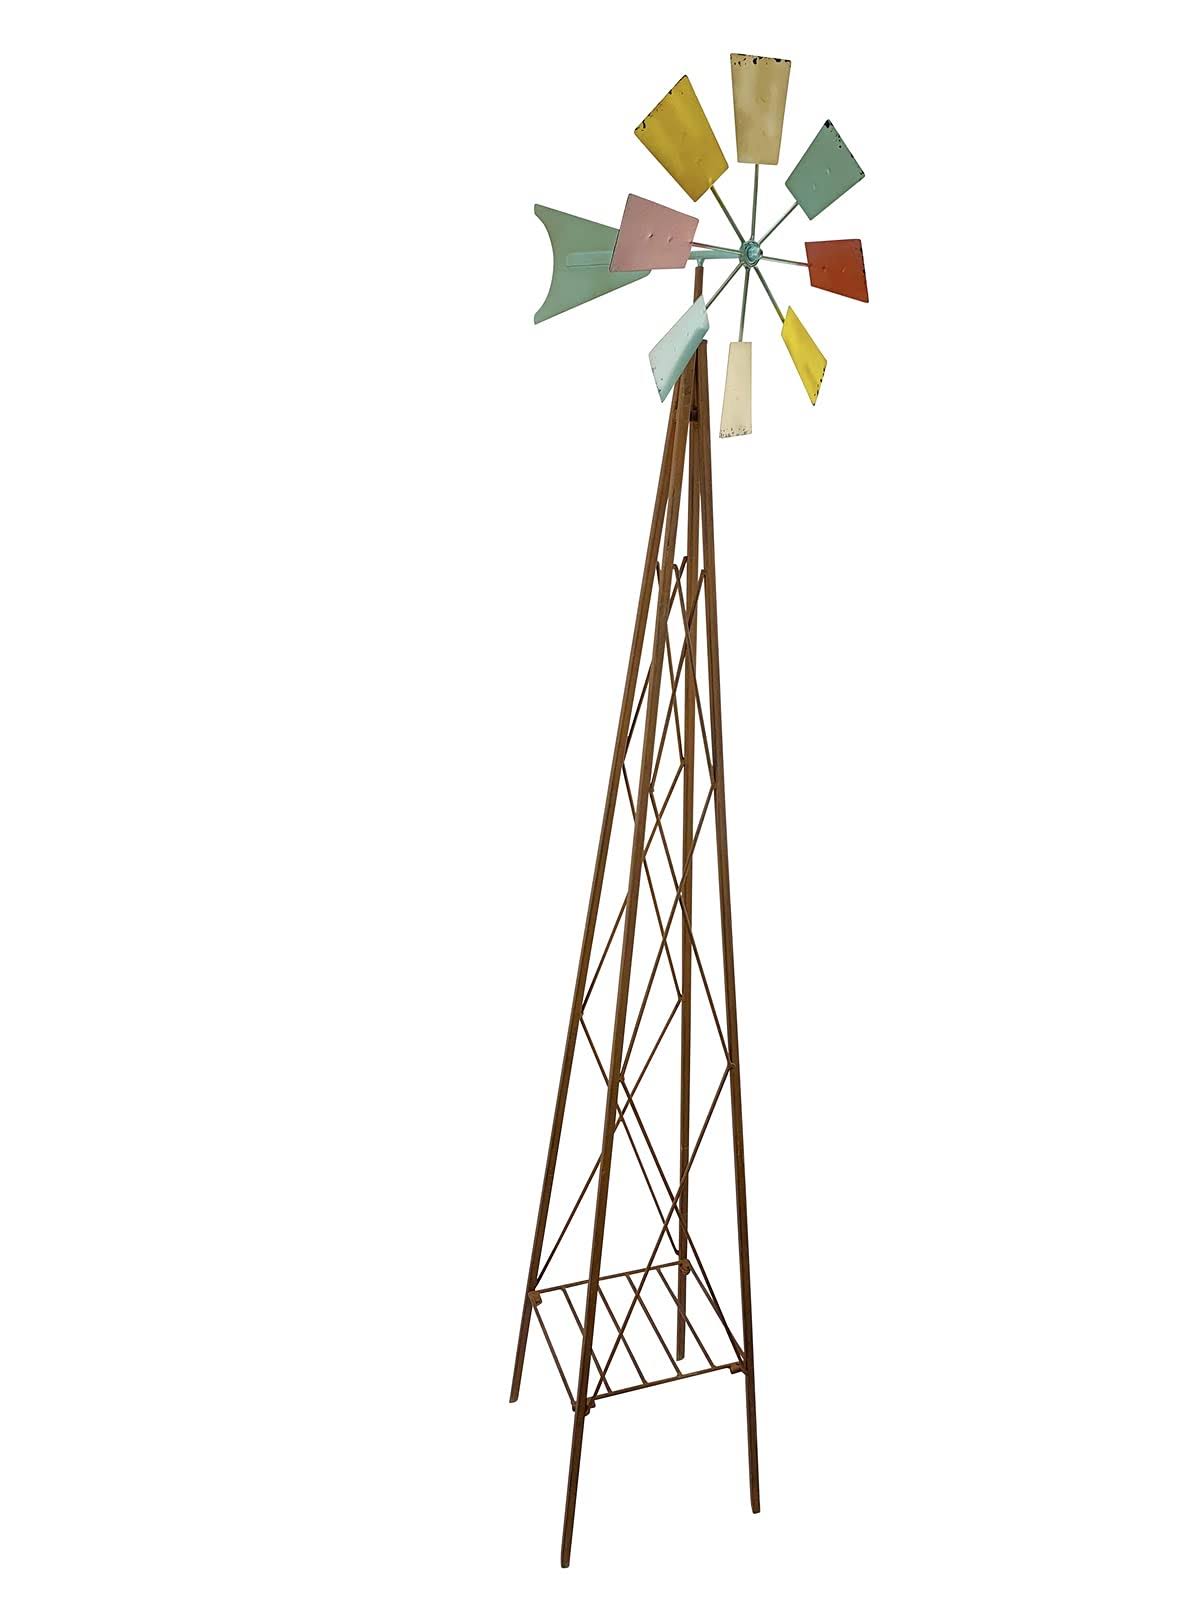 Red Carpet Studios 34305 Colorful Blades Medium Windmill